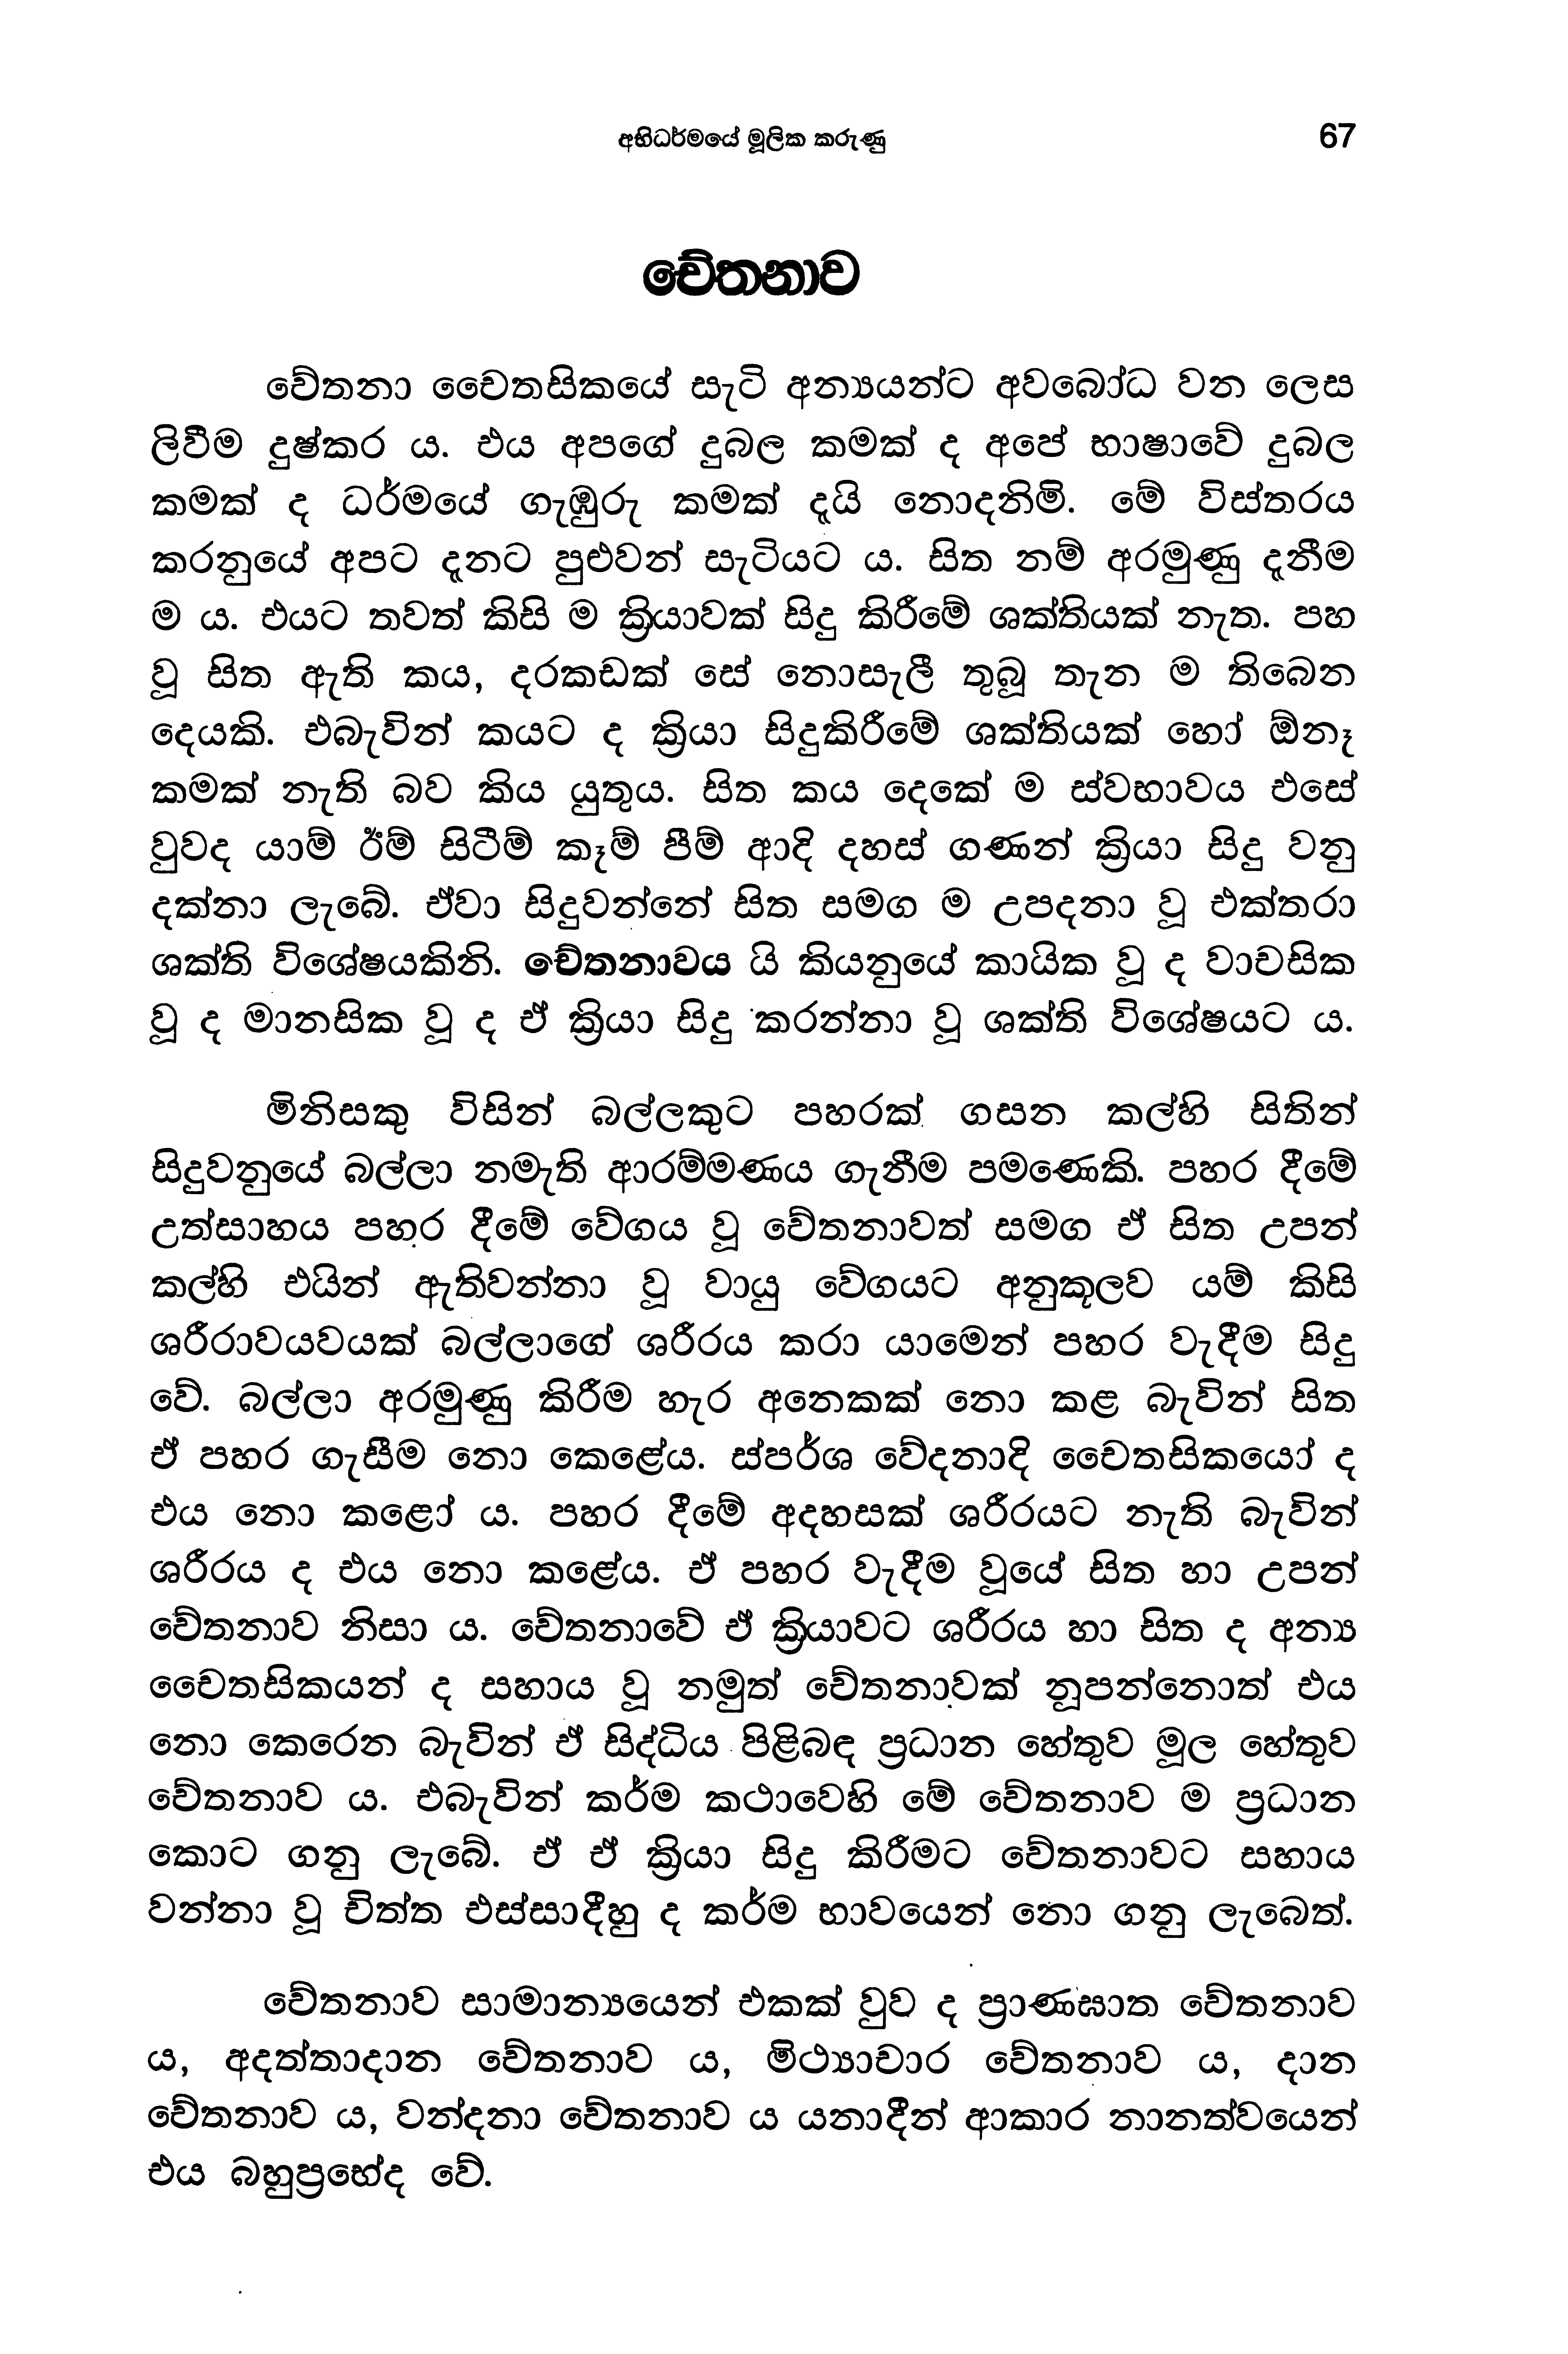 abhidharmaye-mulika-karunu-rerukane-chandavimala-nahimi-full-book-with-comments-highlights-and-book-marks_page_065